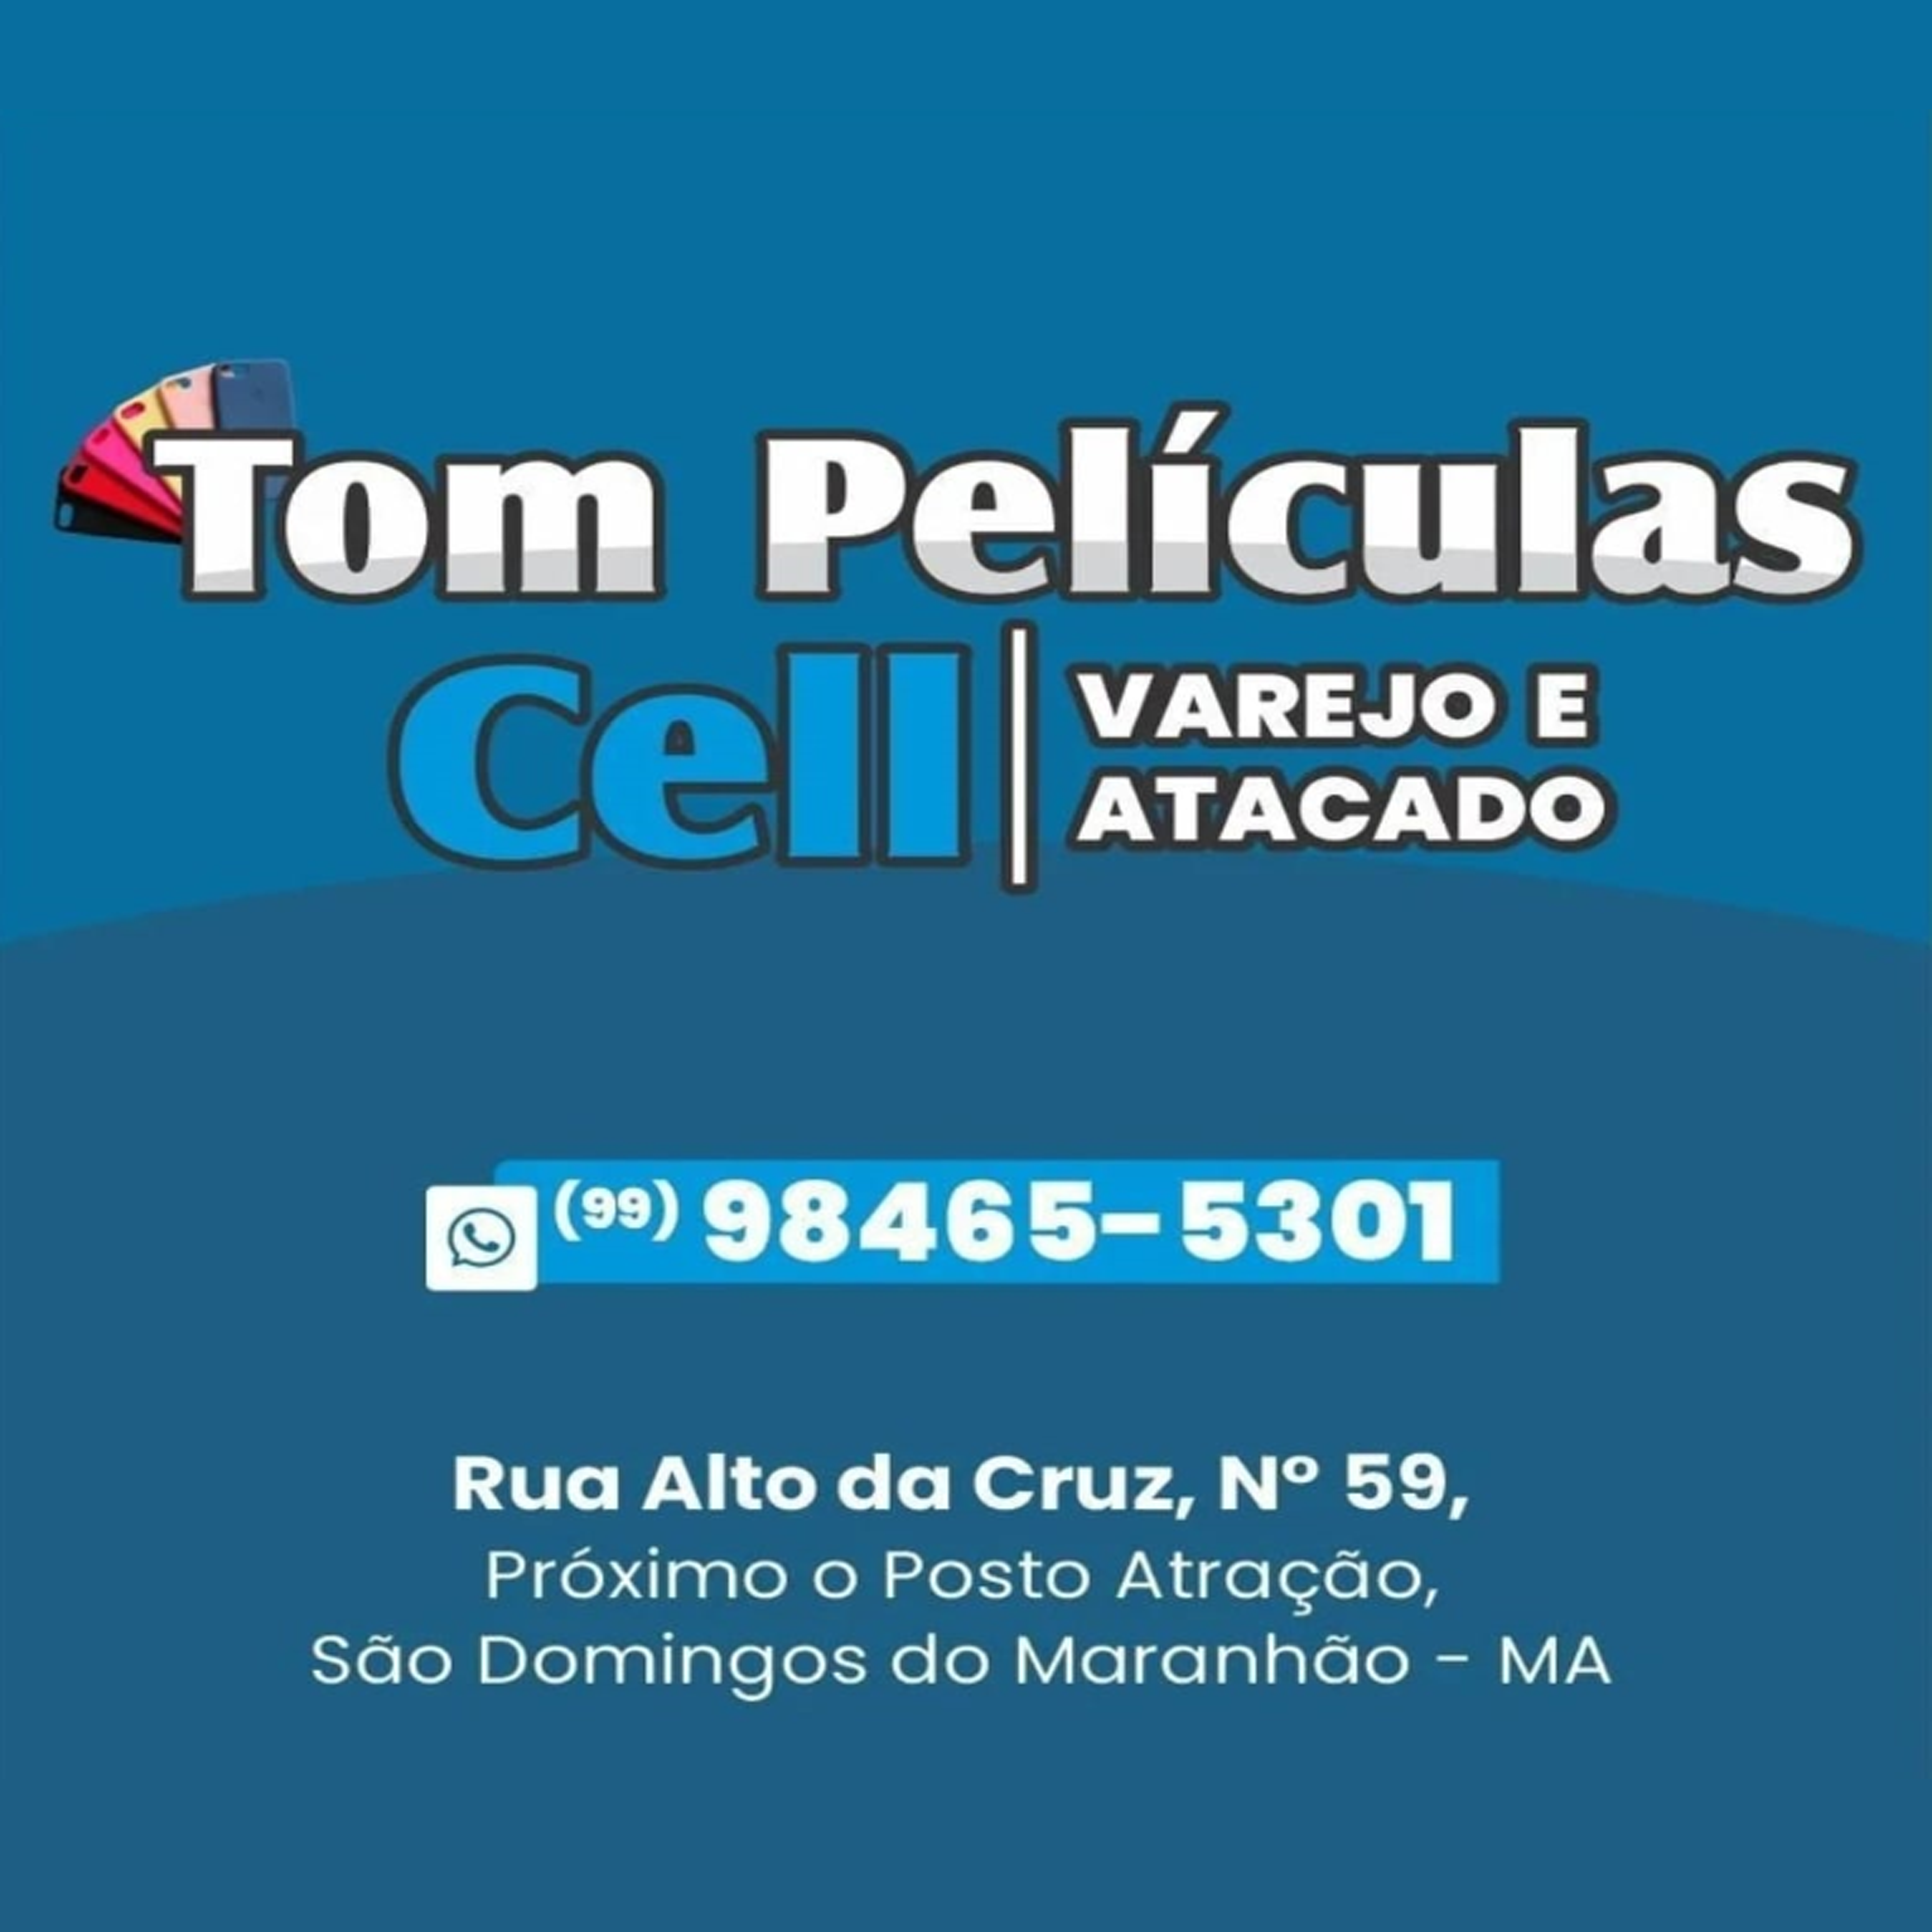 Tom Periculas Cell - Varejo e Atacado